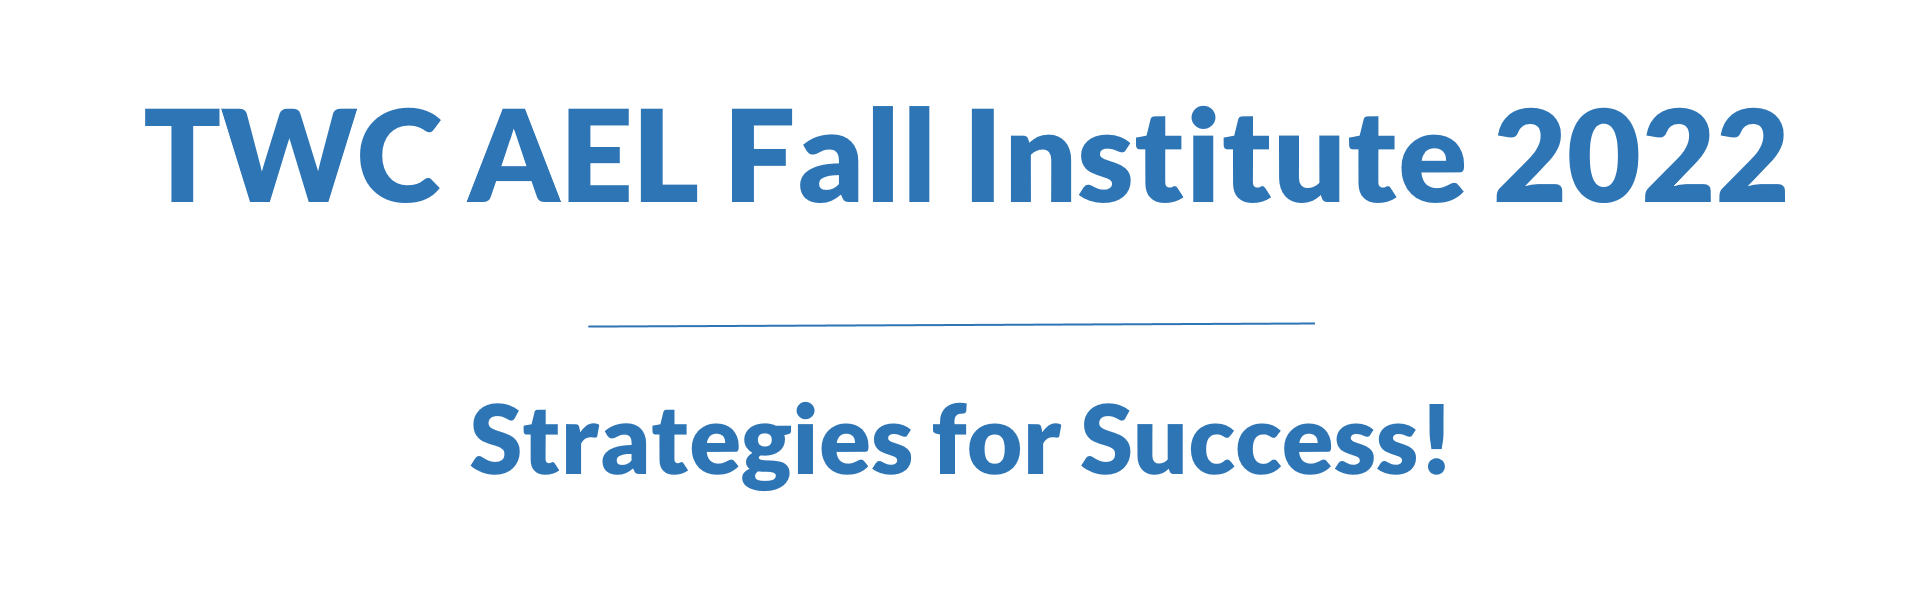 TWC AEL Fall Institute 2022 Strategies for Success!